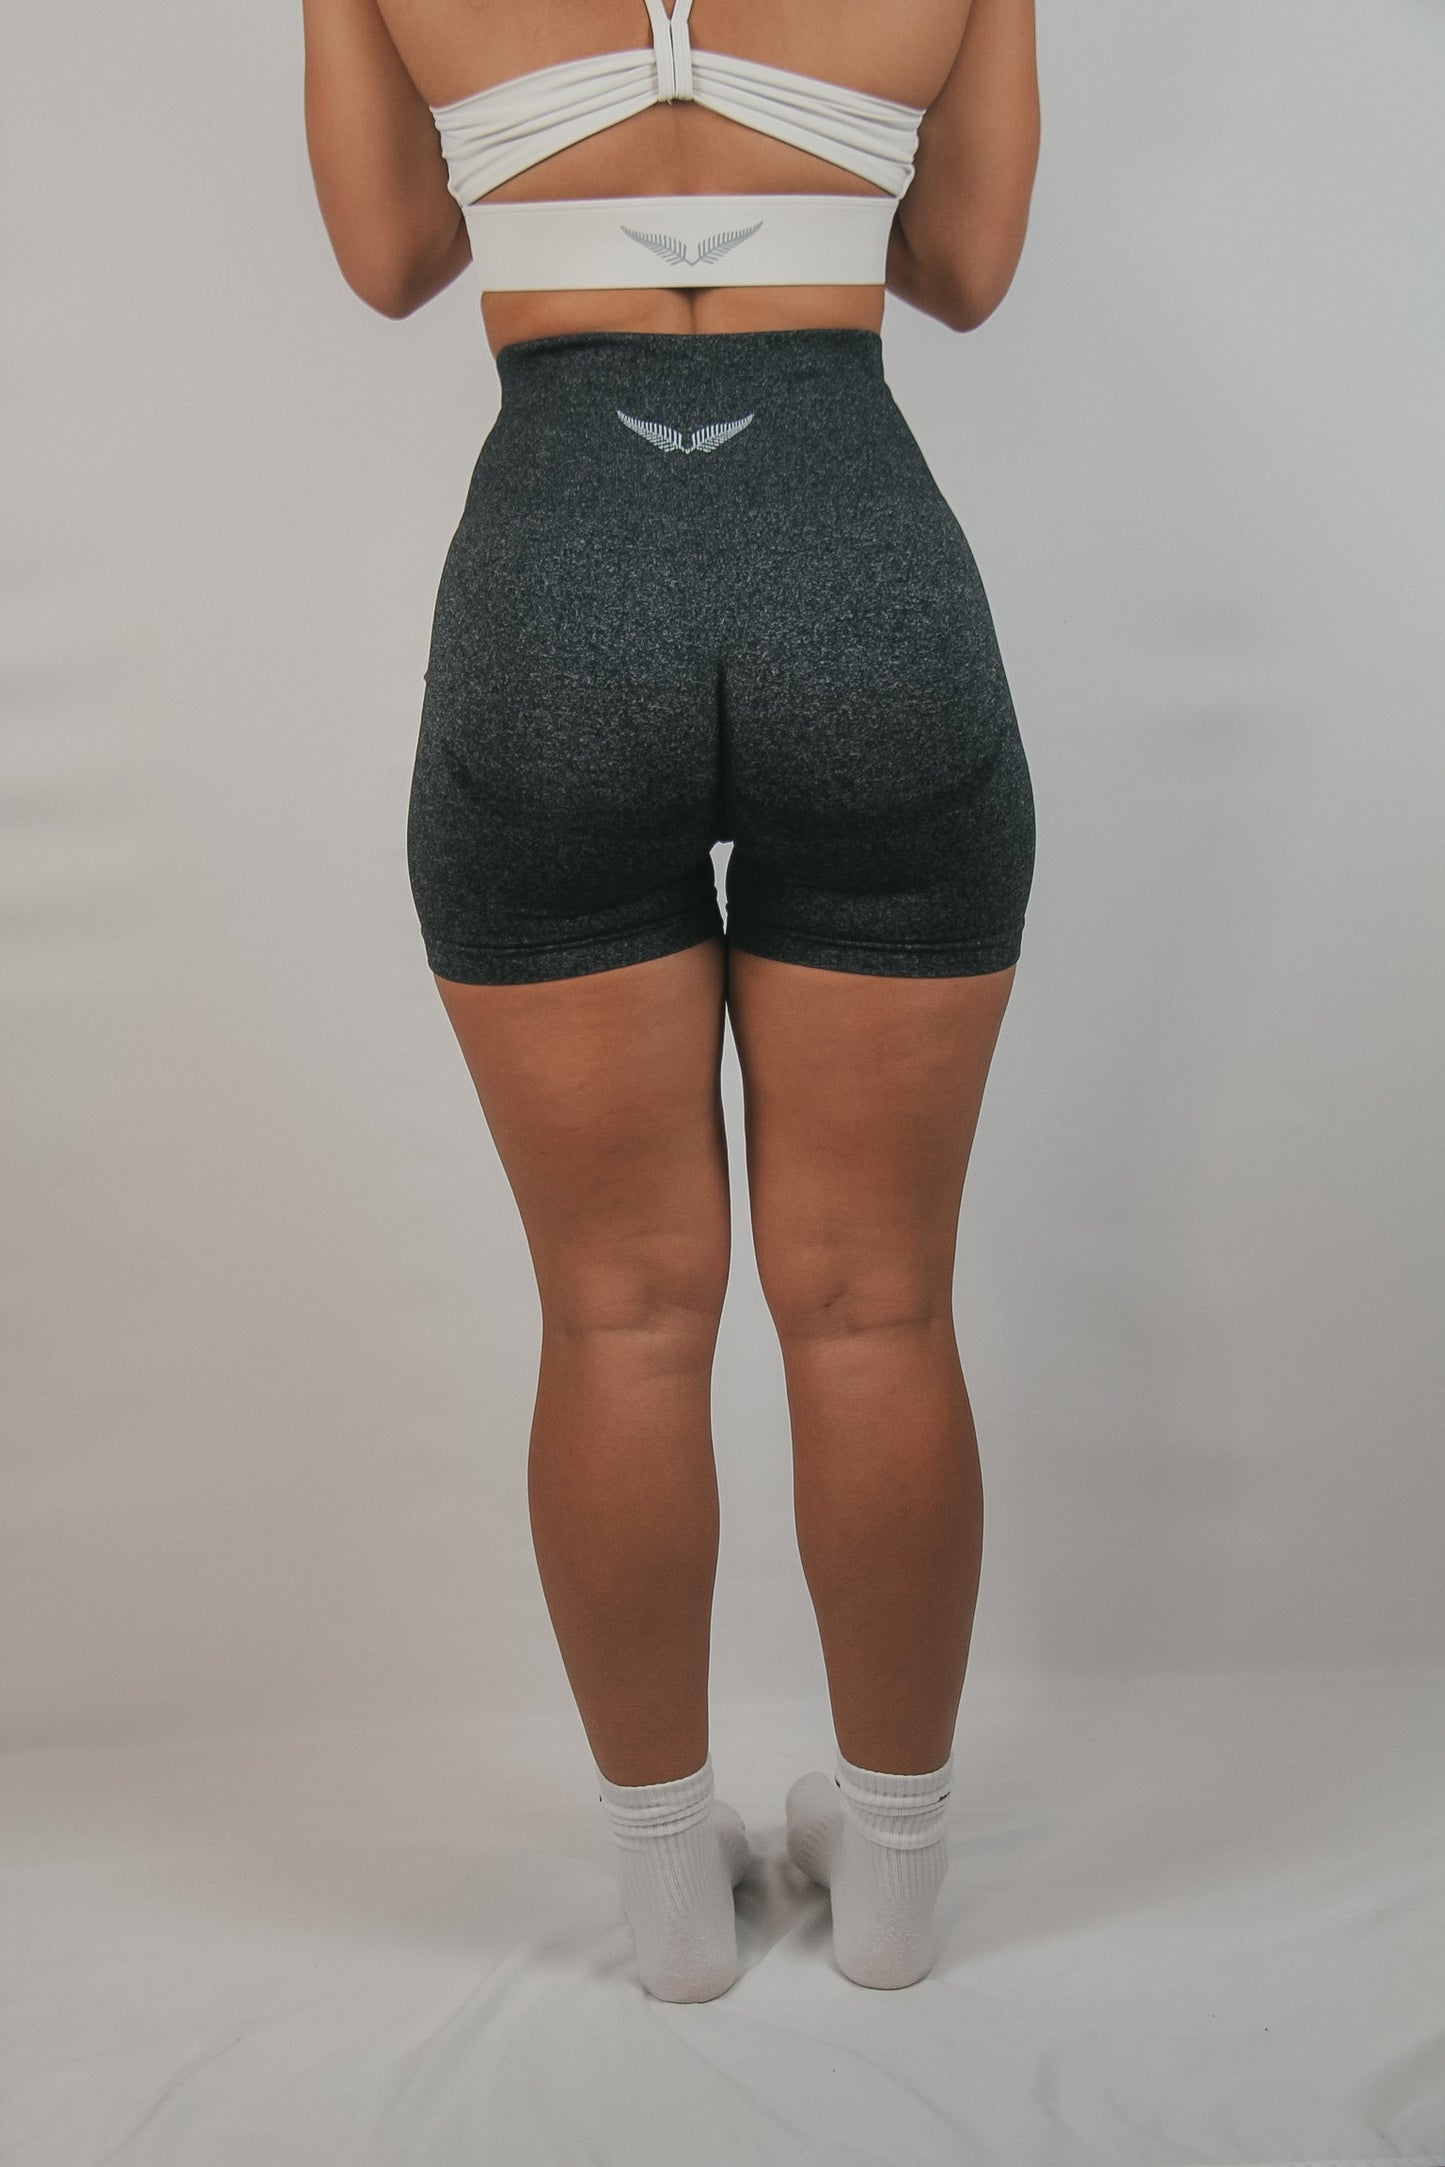 Contour Seamless Shorts (Charcoal)